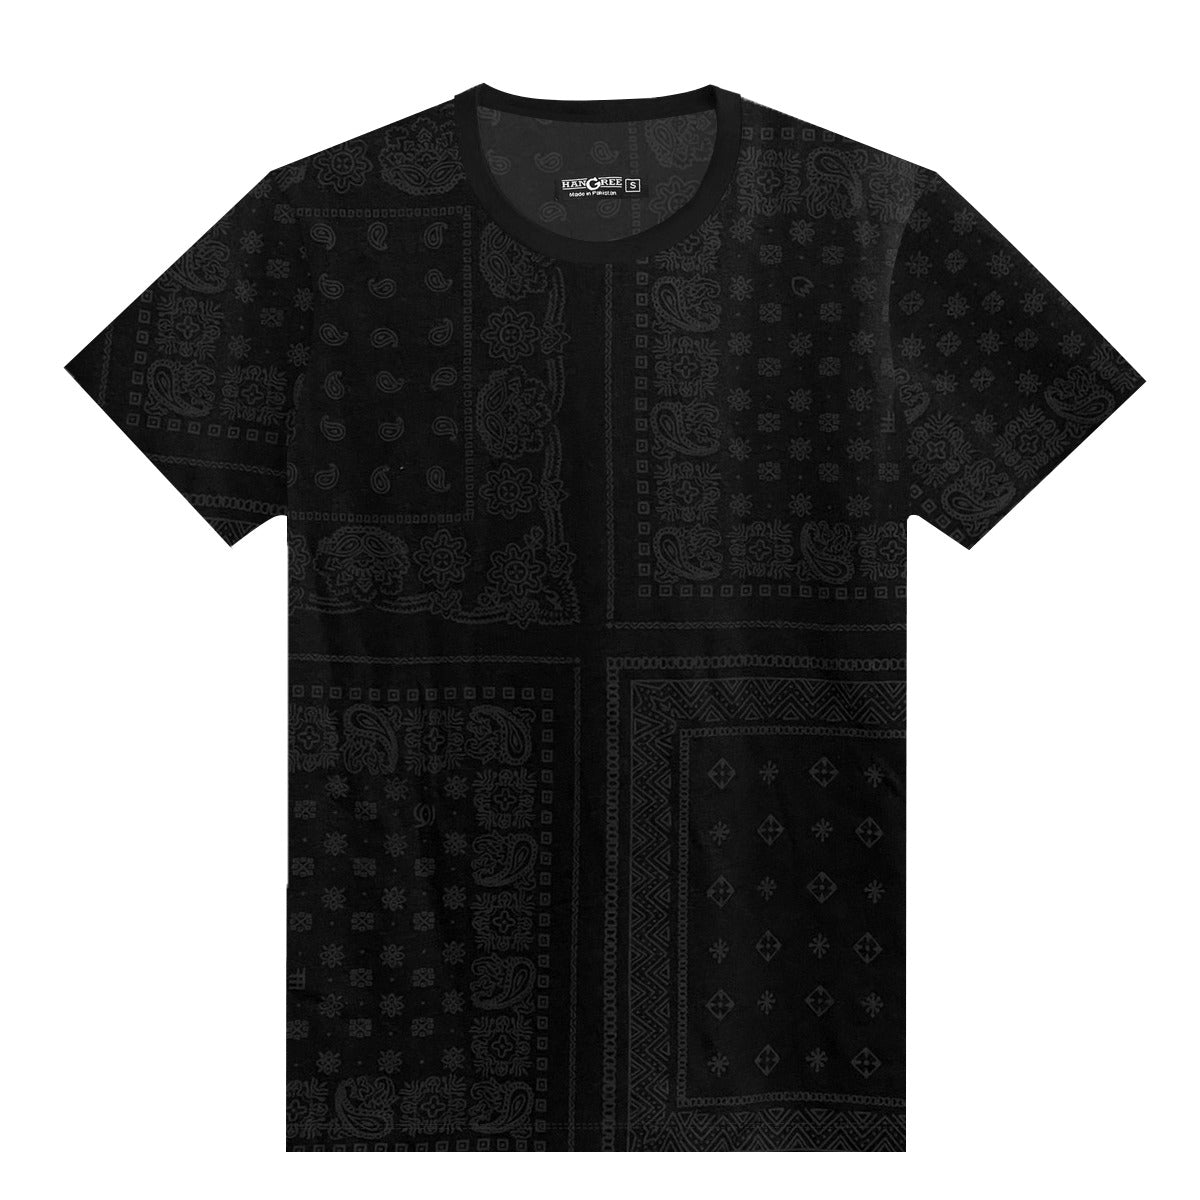 HG Designer Printed All Over Tee Shirt - Black